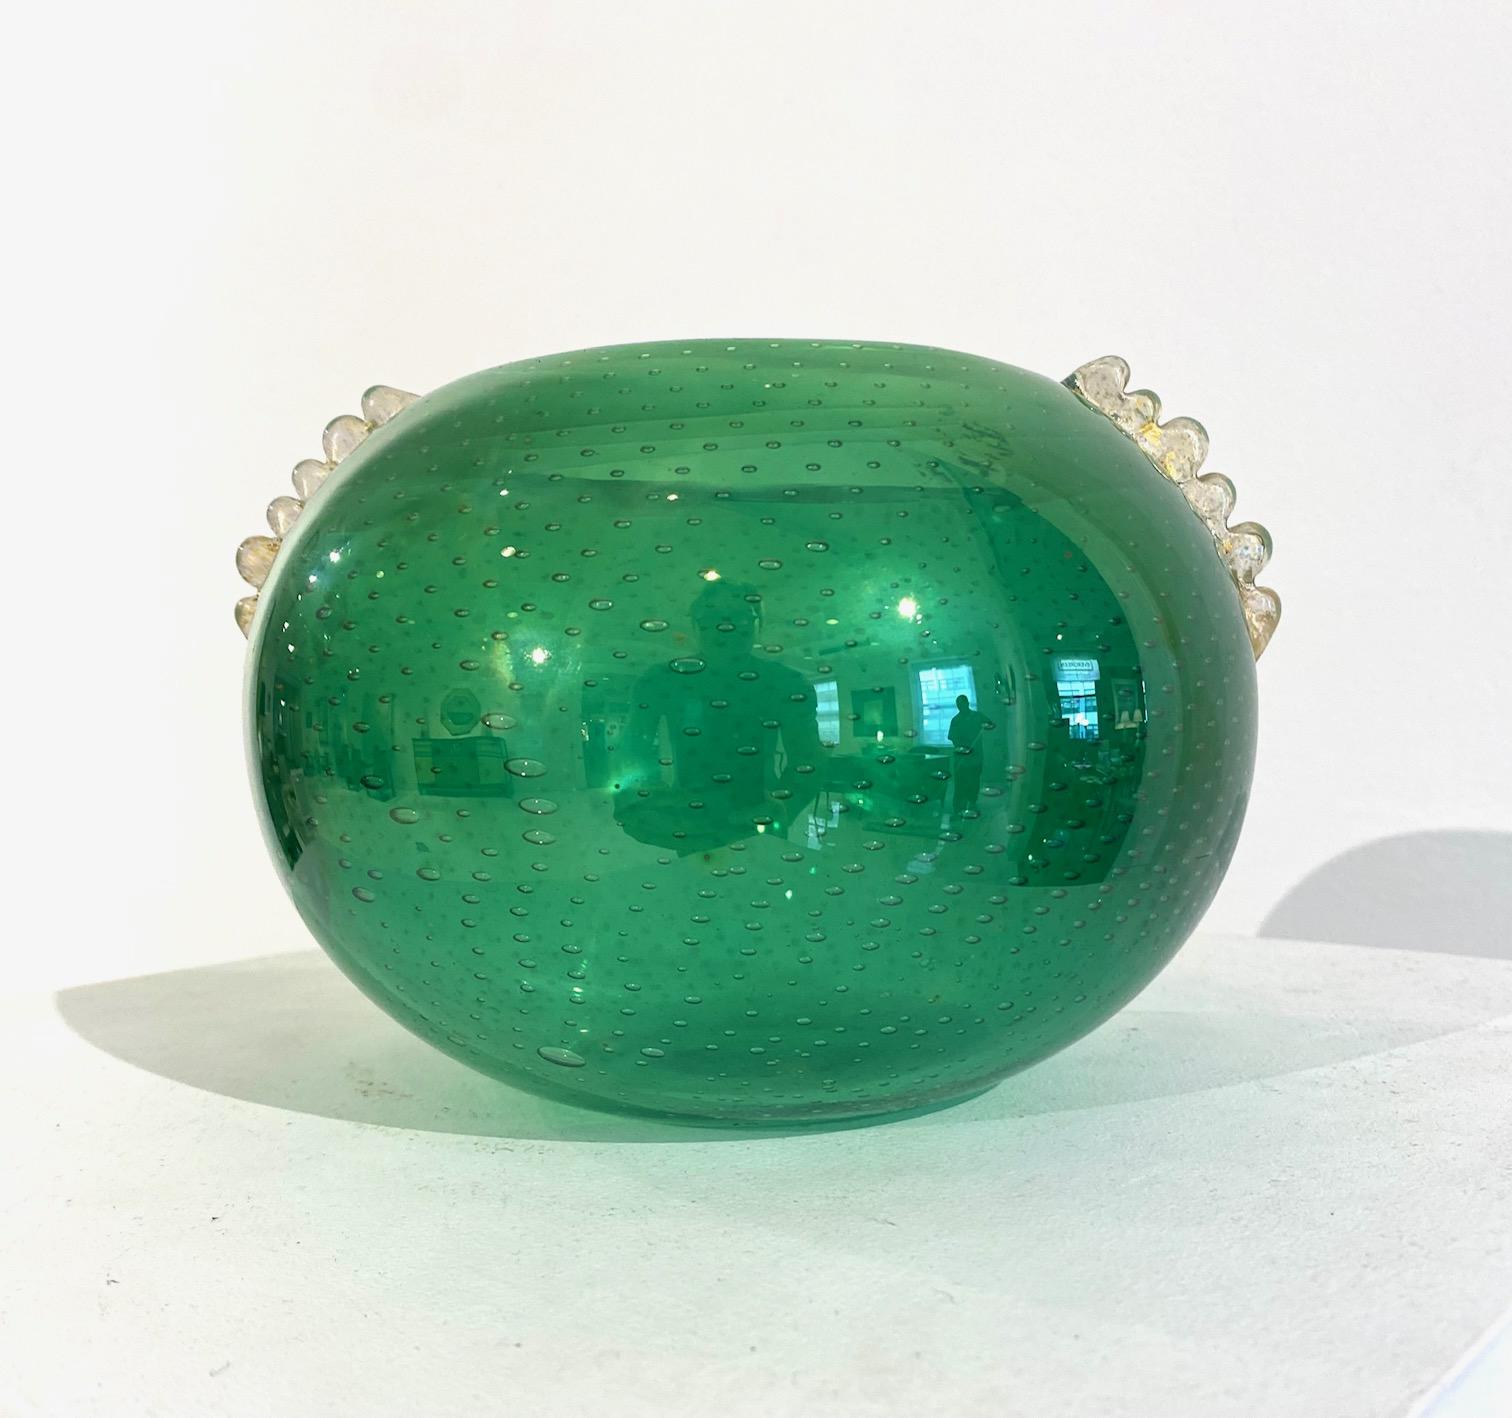 Green bulicante glass vase by Barovier e Toso



					

